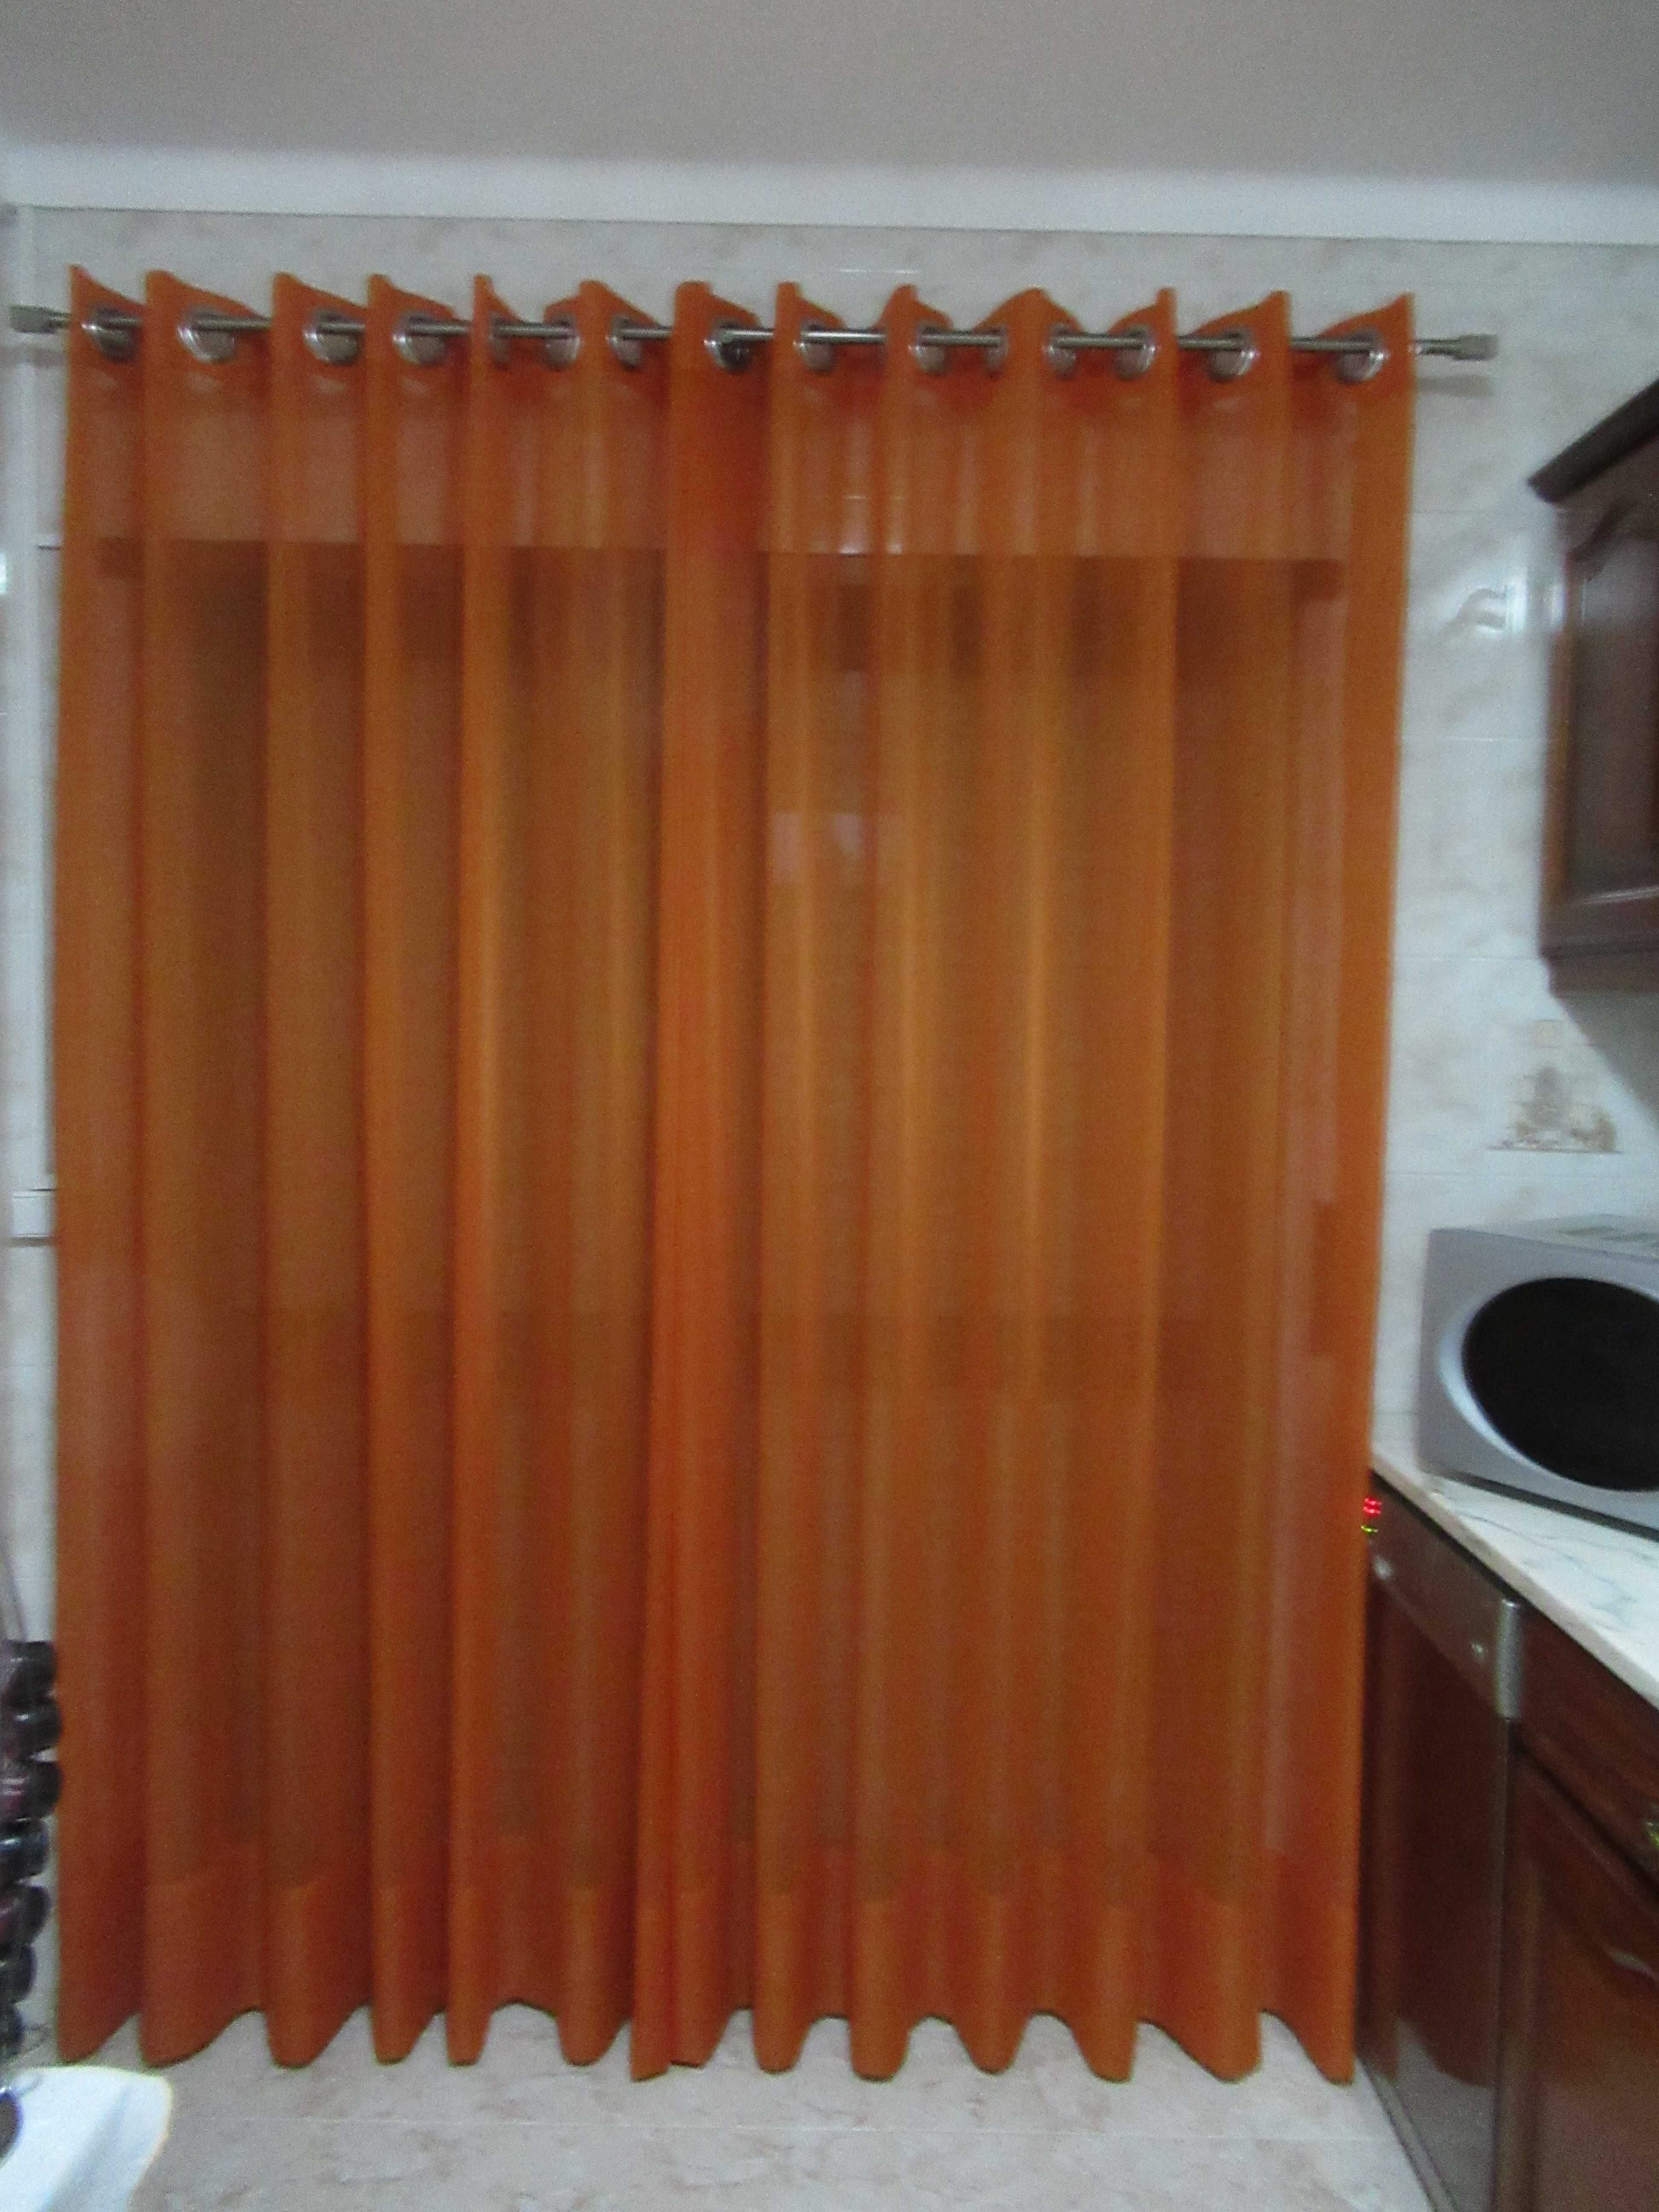 cortinado laranja com varão